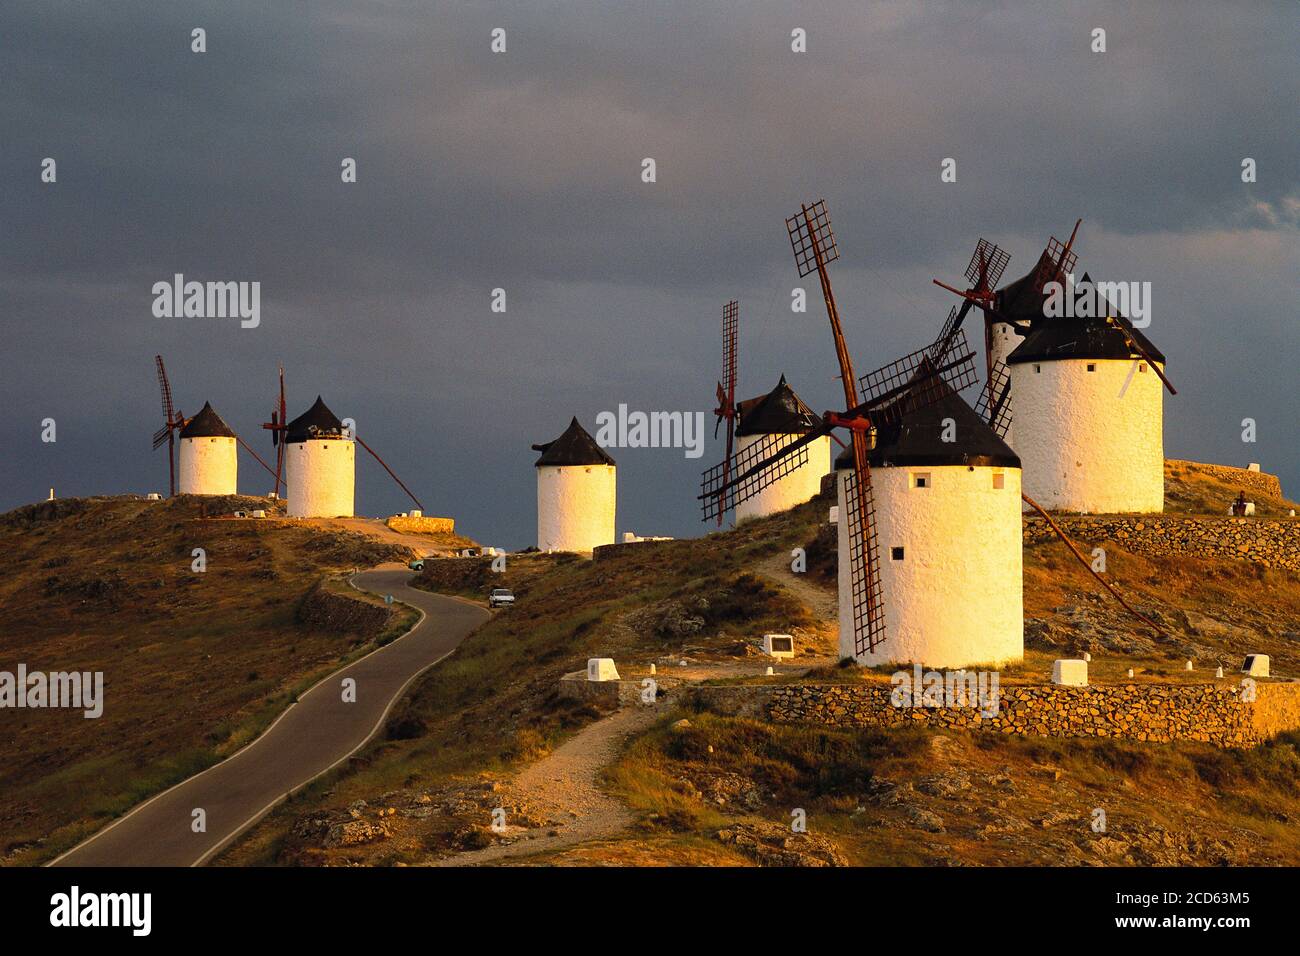 Old traditional windmills on hills, Consuegra, Castilla La Mancha, Spain Stock Photo